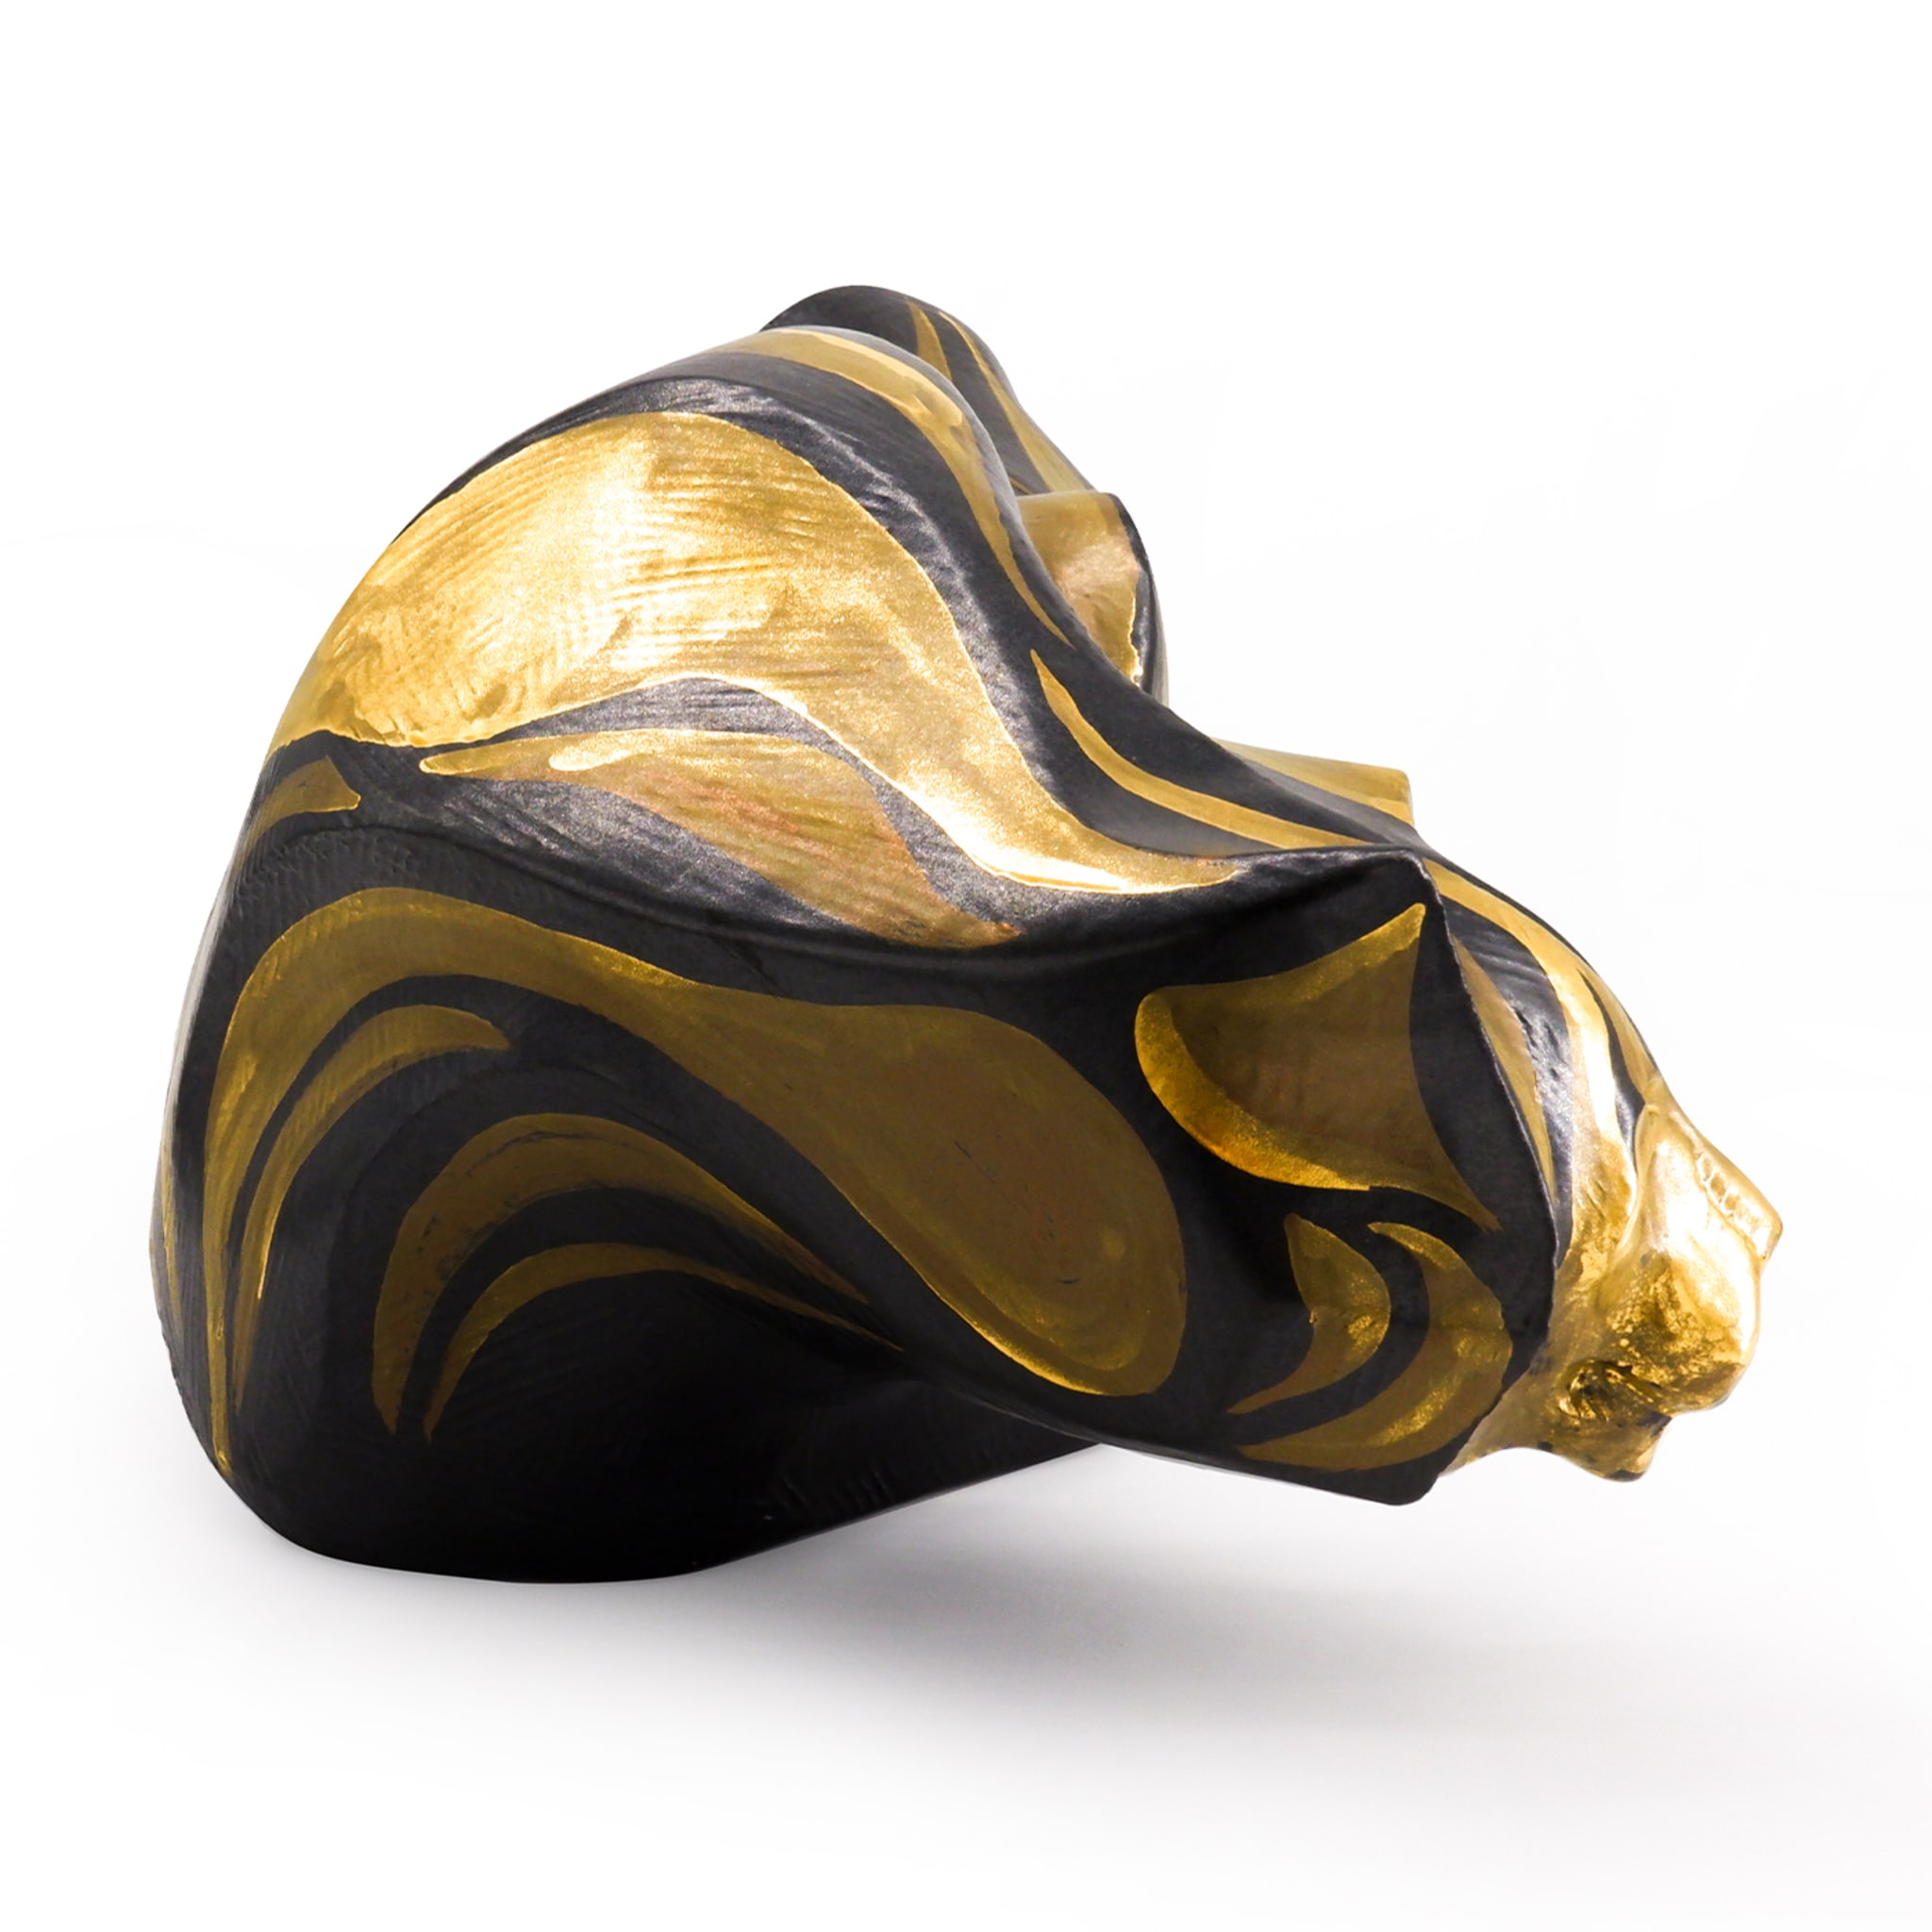 Tora black and gold sculpture - Alternative view 2